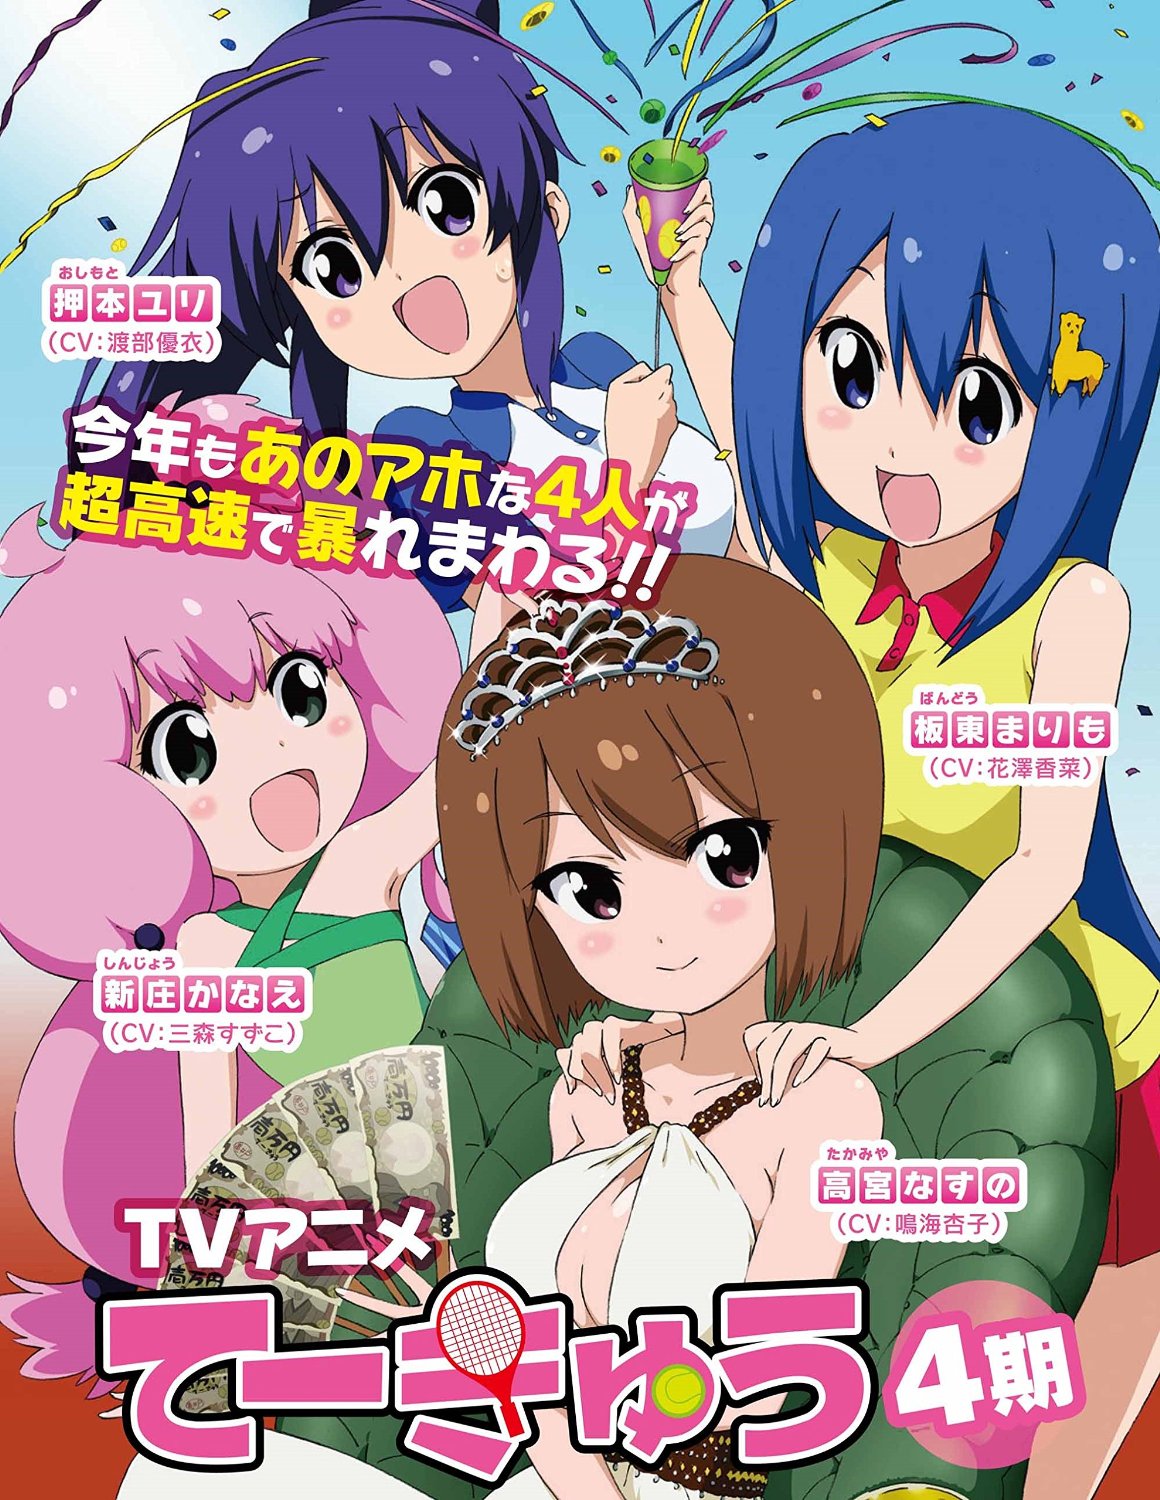 Nana Mizuki, Kensho Ono, More Join Cast of Tomodachi Game Anime - News -  Anime News Network